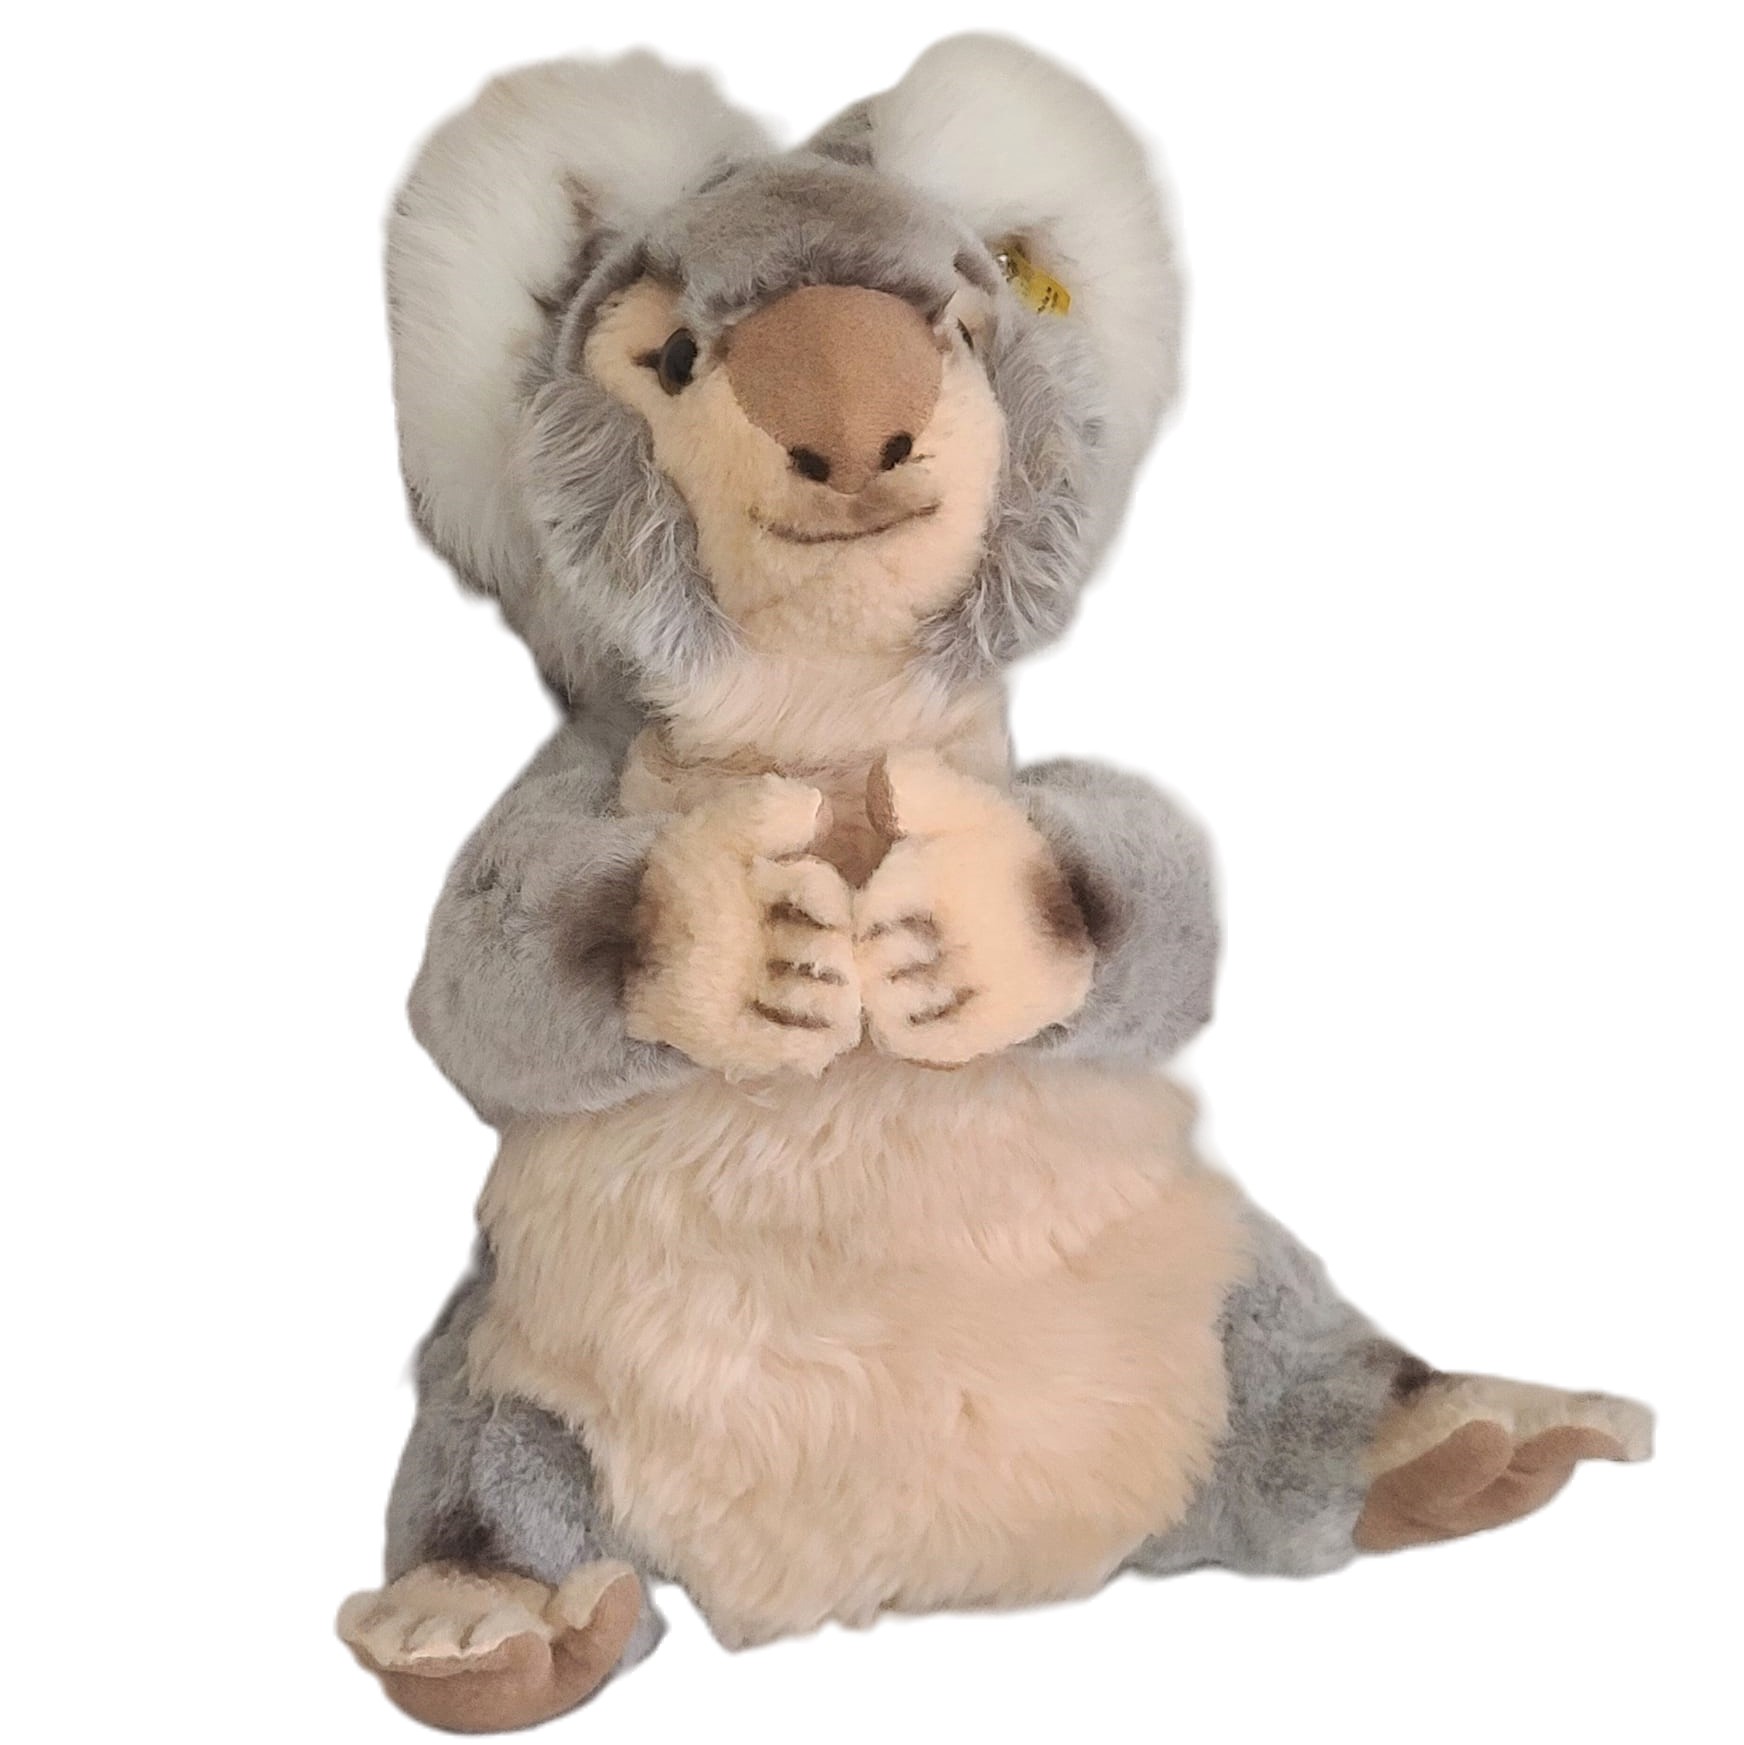 STEIFF Koala Bear, Molly 0331/40 Made in Germany